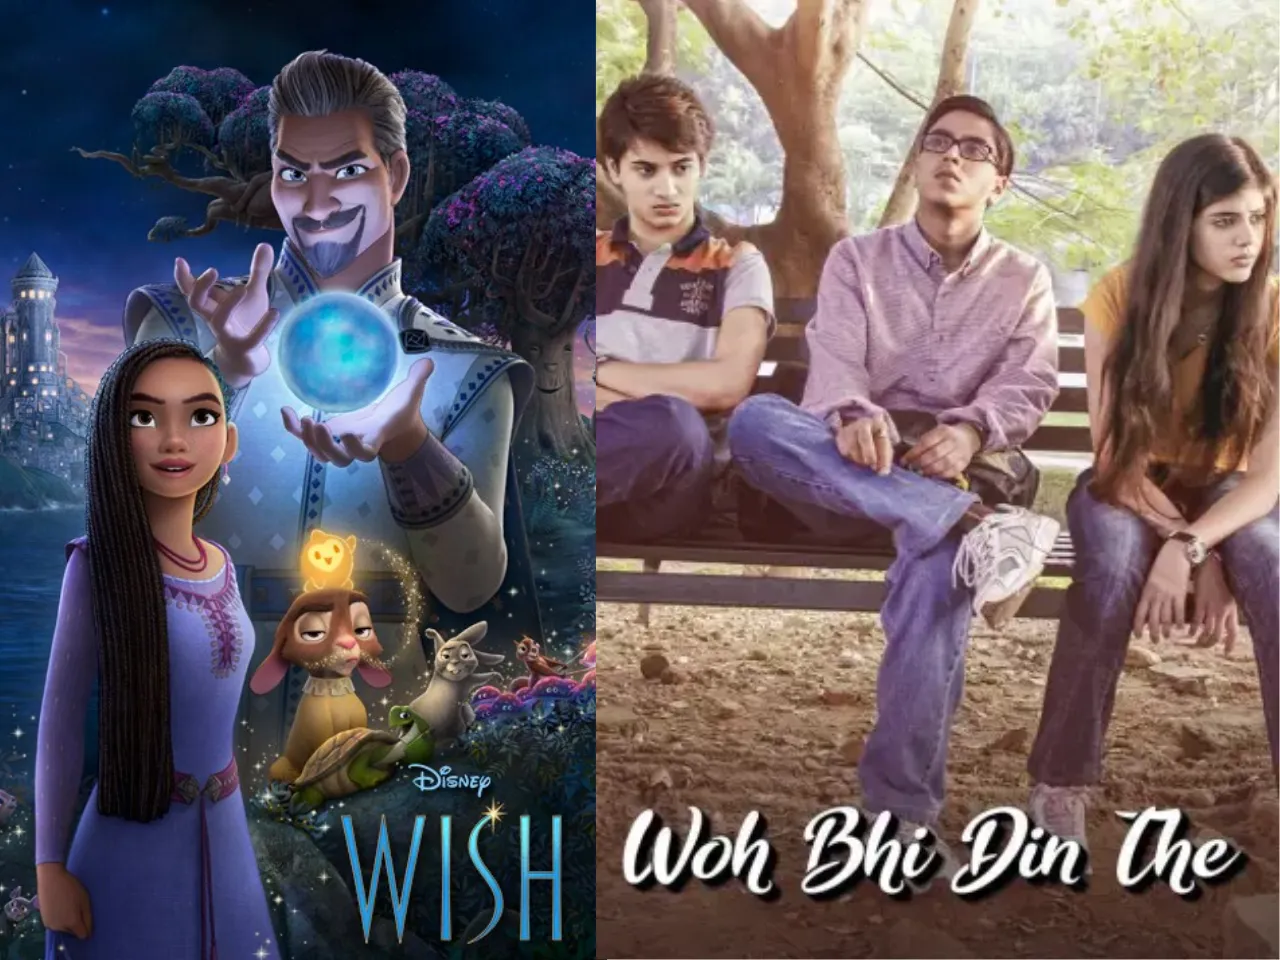 Wish and Woh Bhi Din The